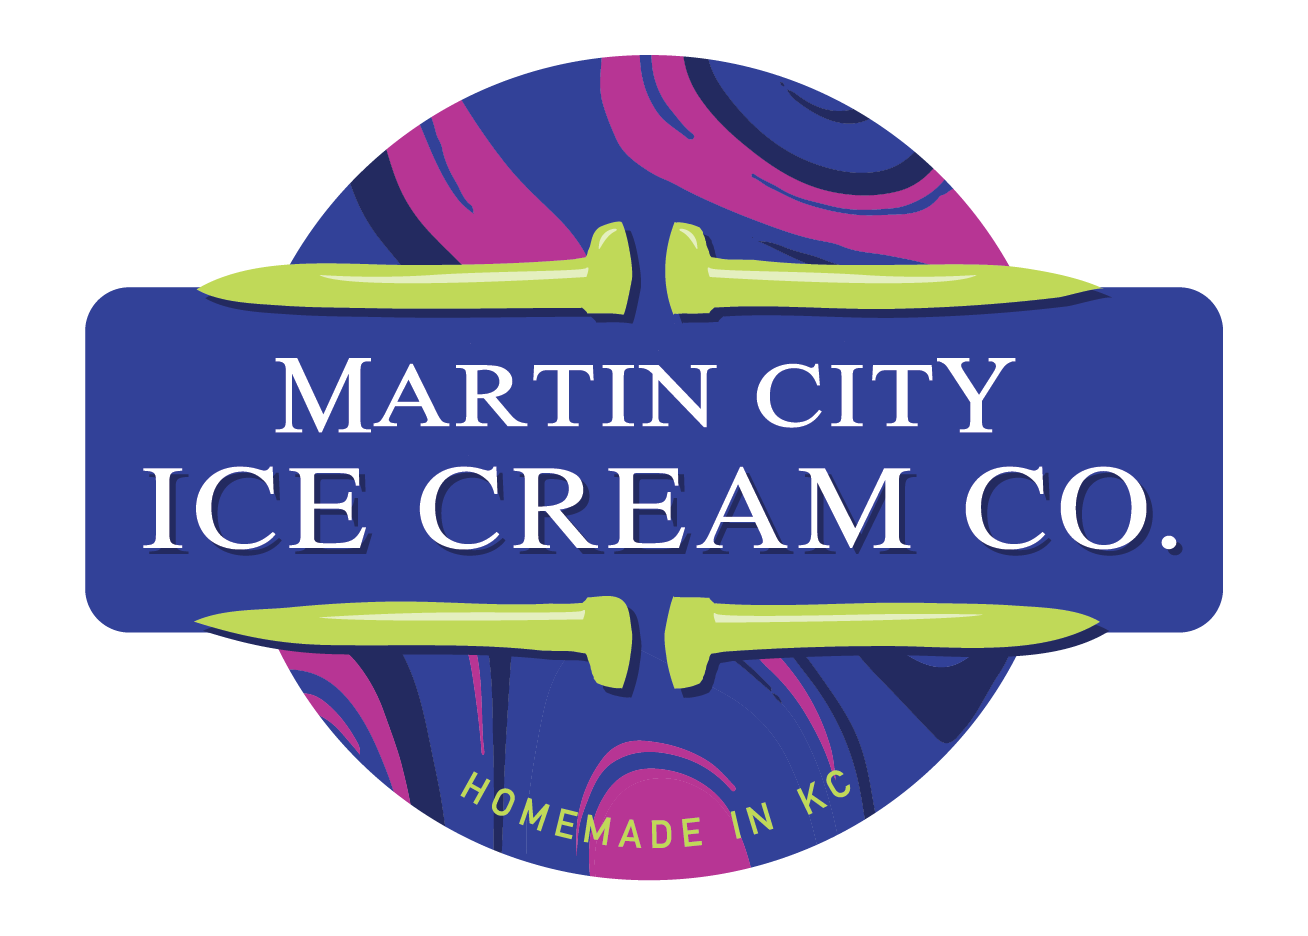 Martin City Ice Cream Co.